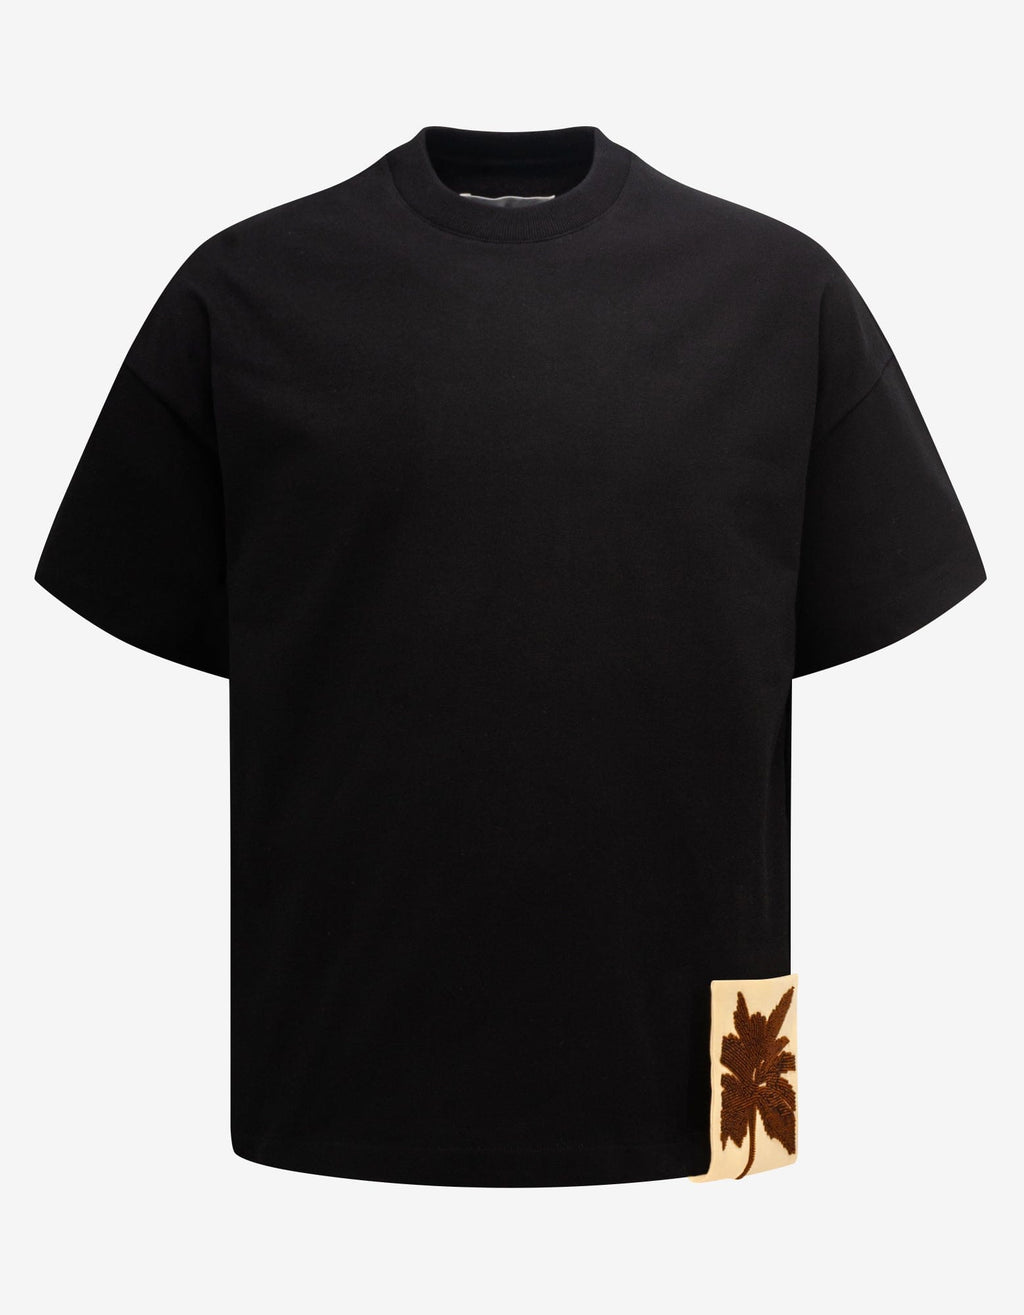 Jil Sander Jil Sander Black Patch T-Shirt